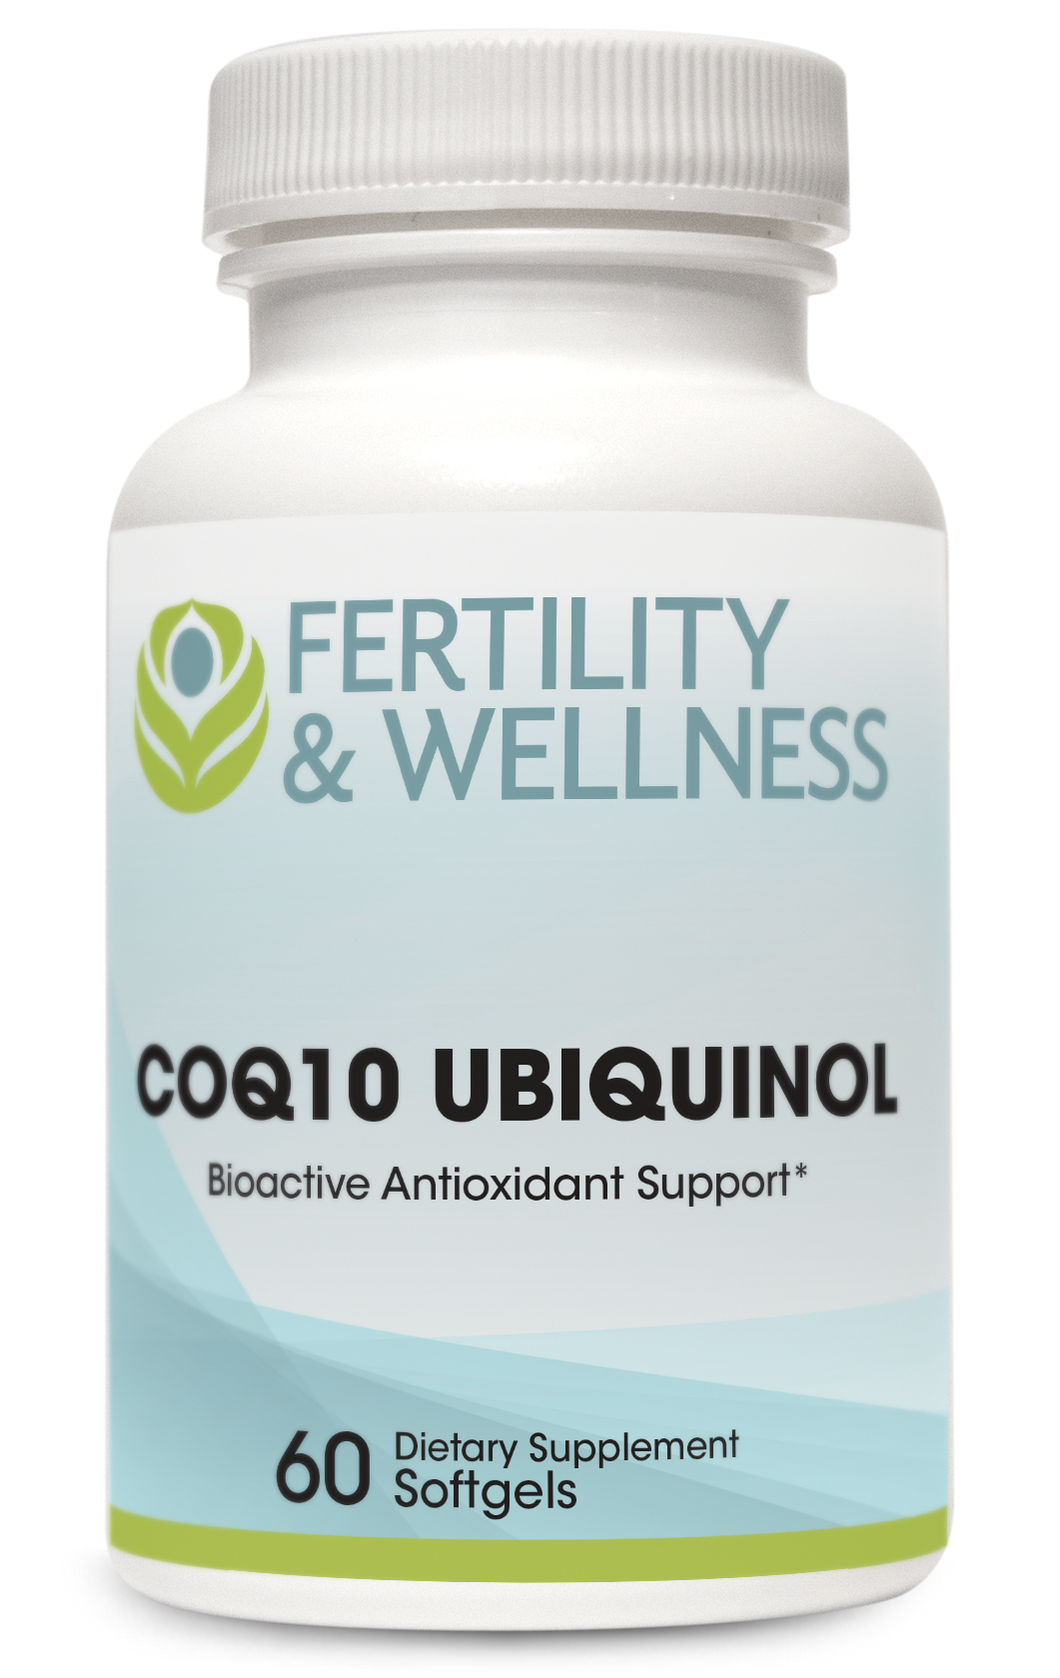 COQ10 UBIQUINOL (30-day supply)